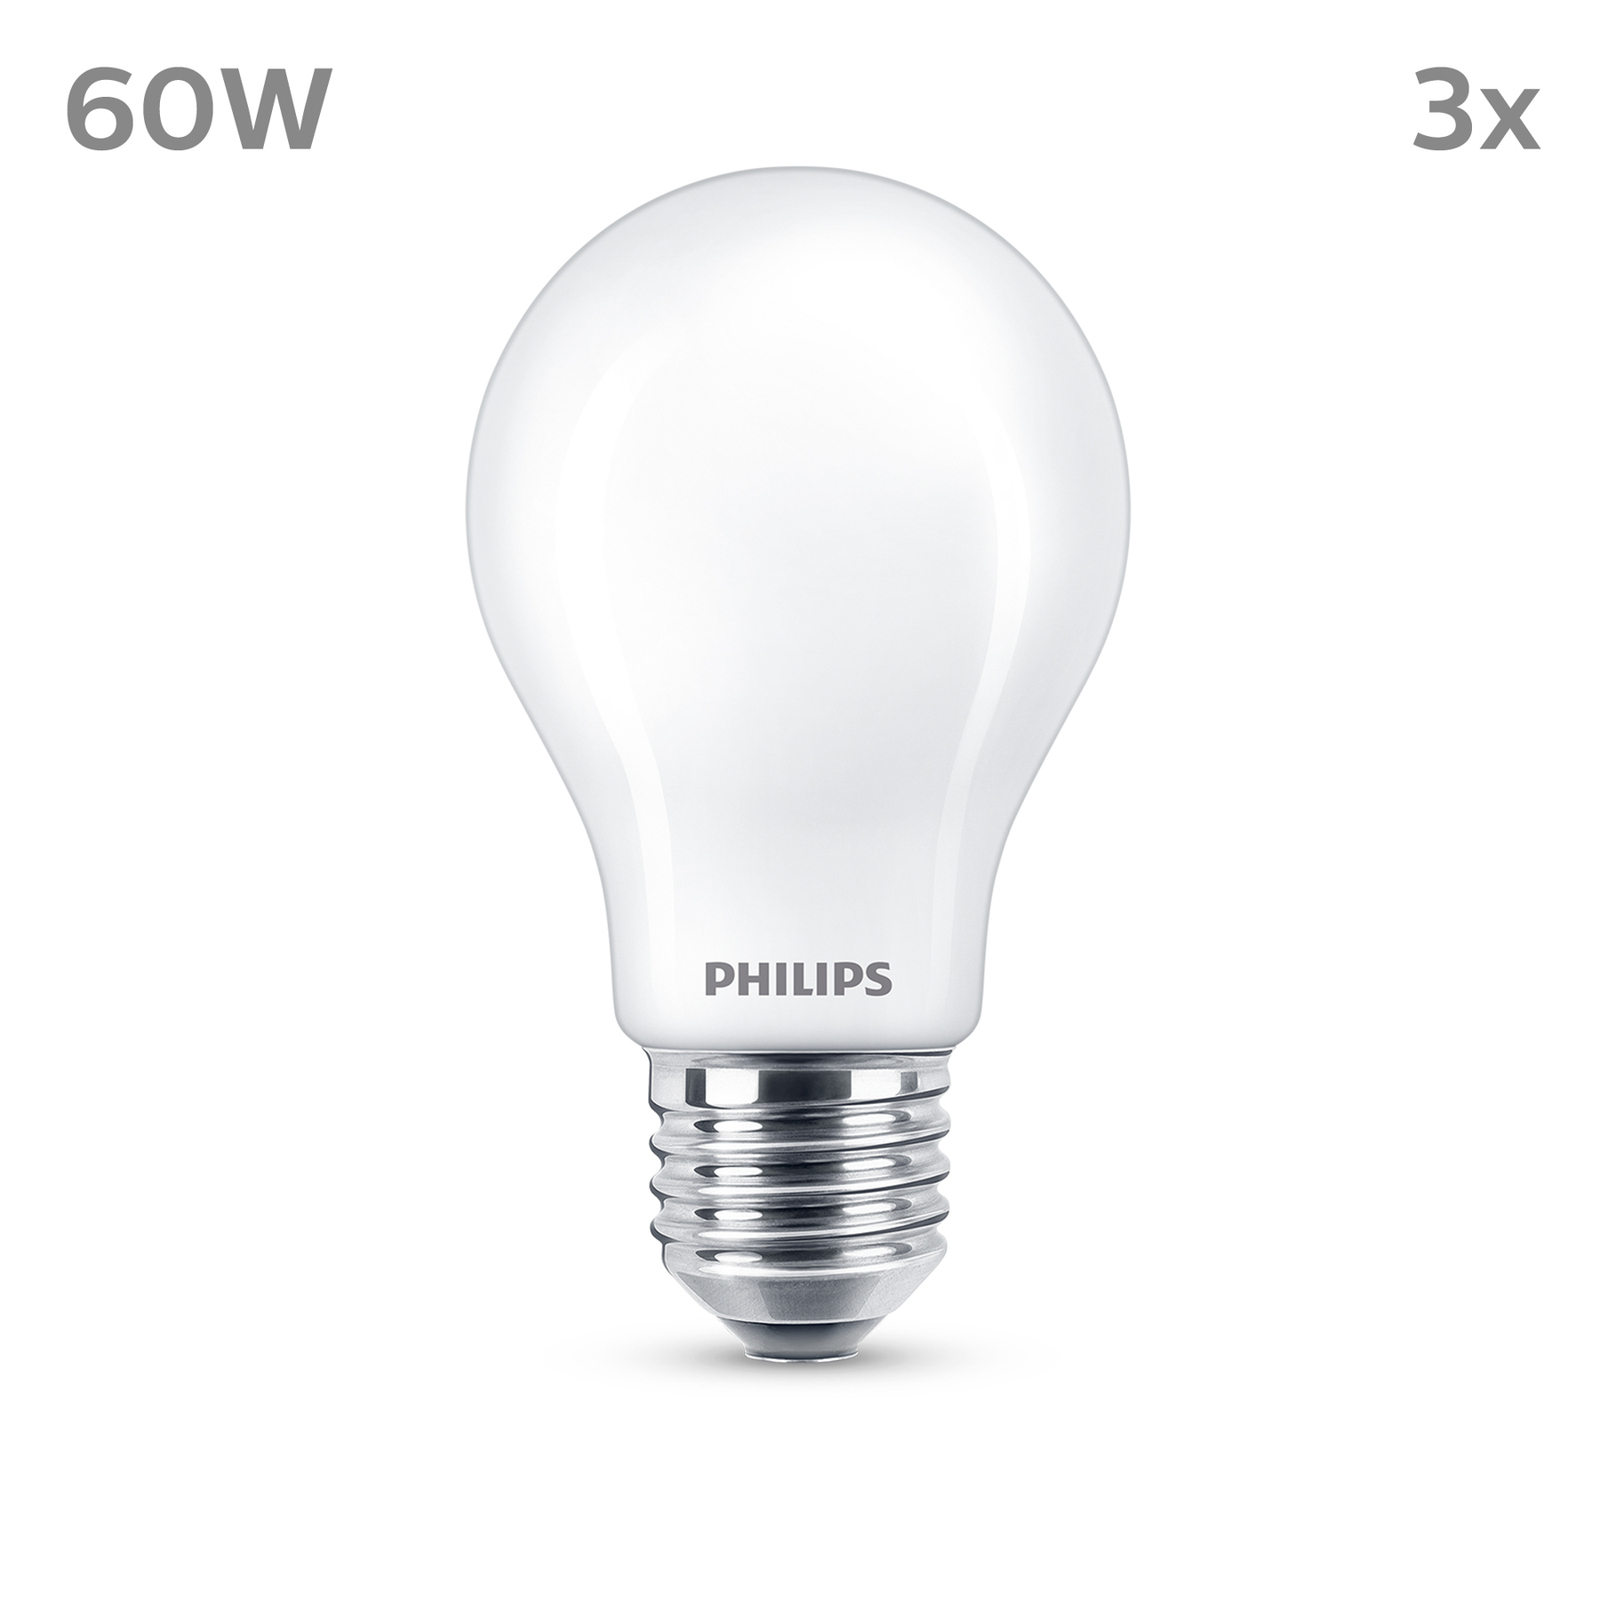 Philips LED žárovka E27 7W 806lm 2700K matná 3ks